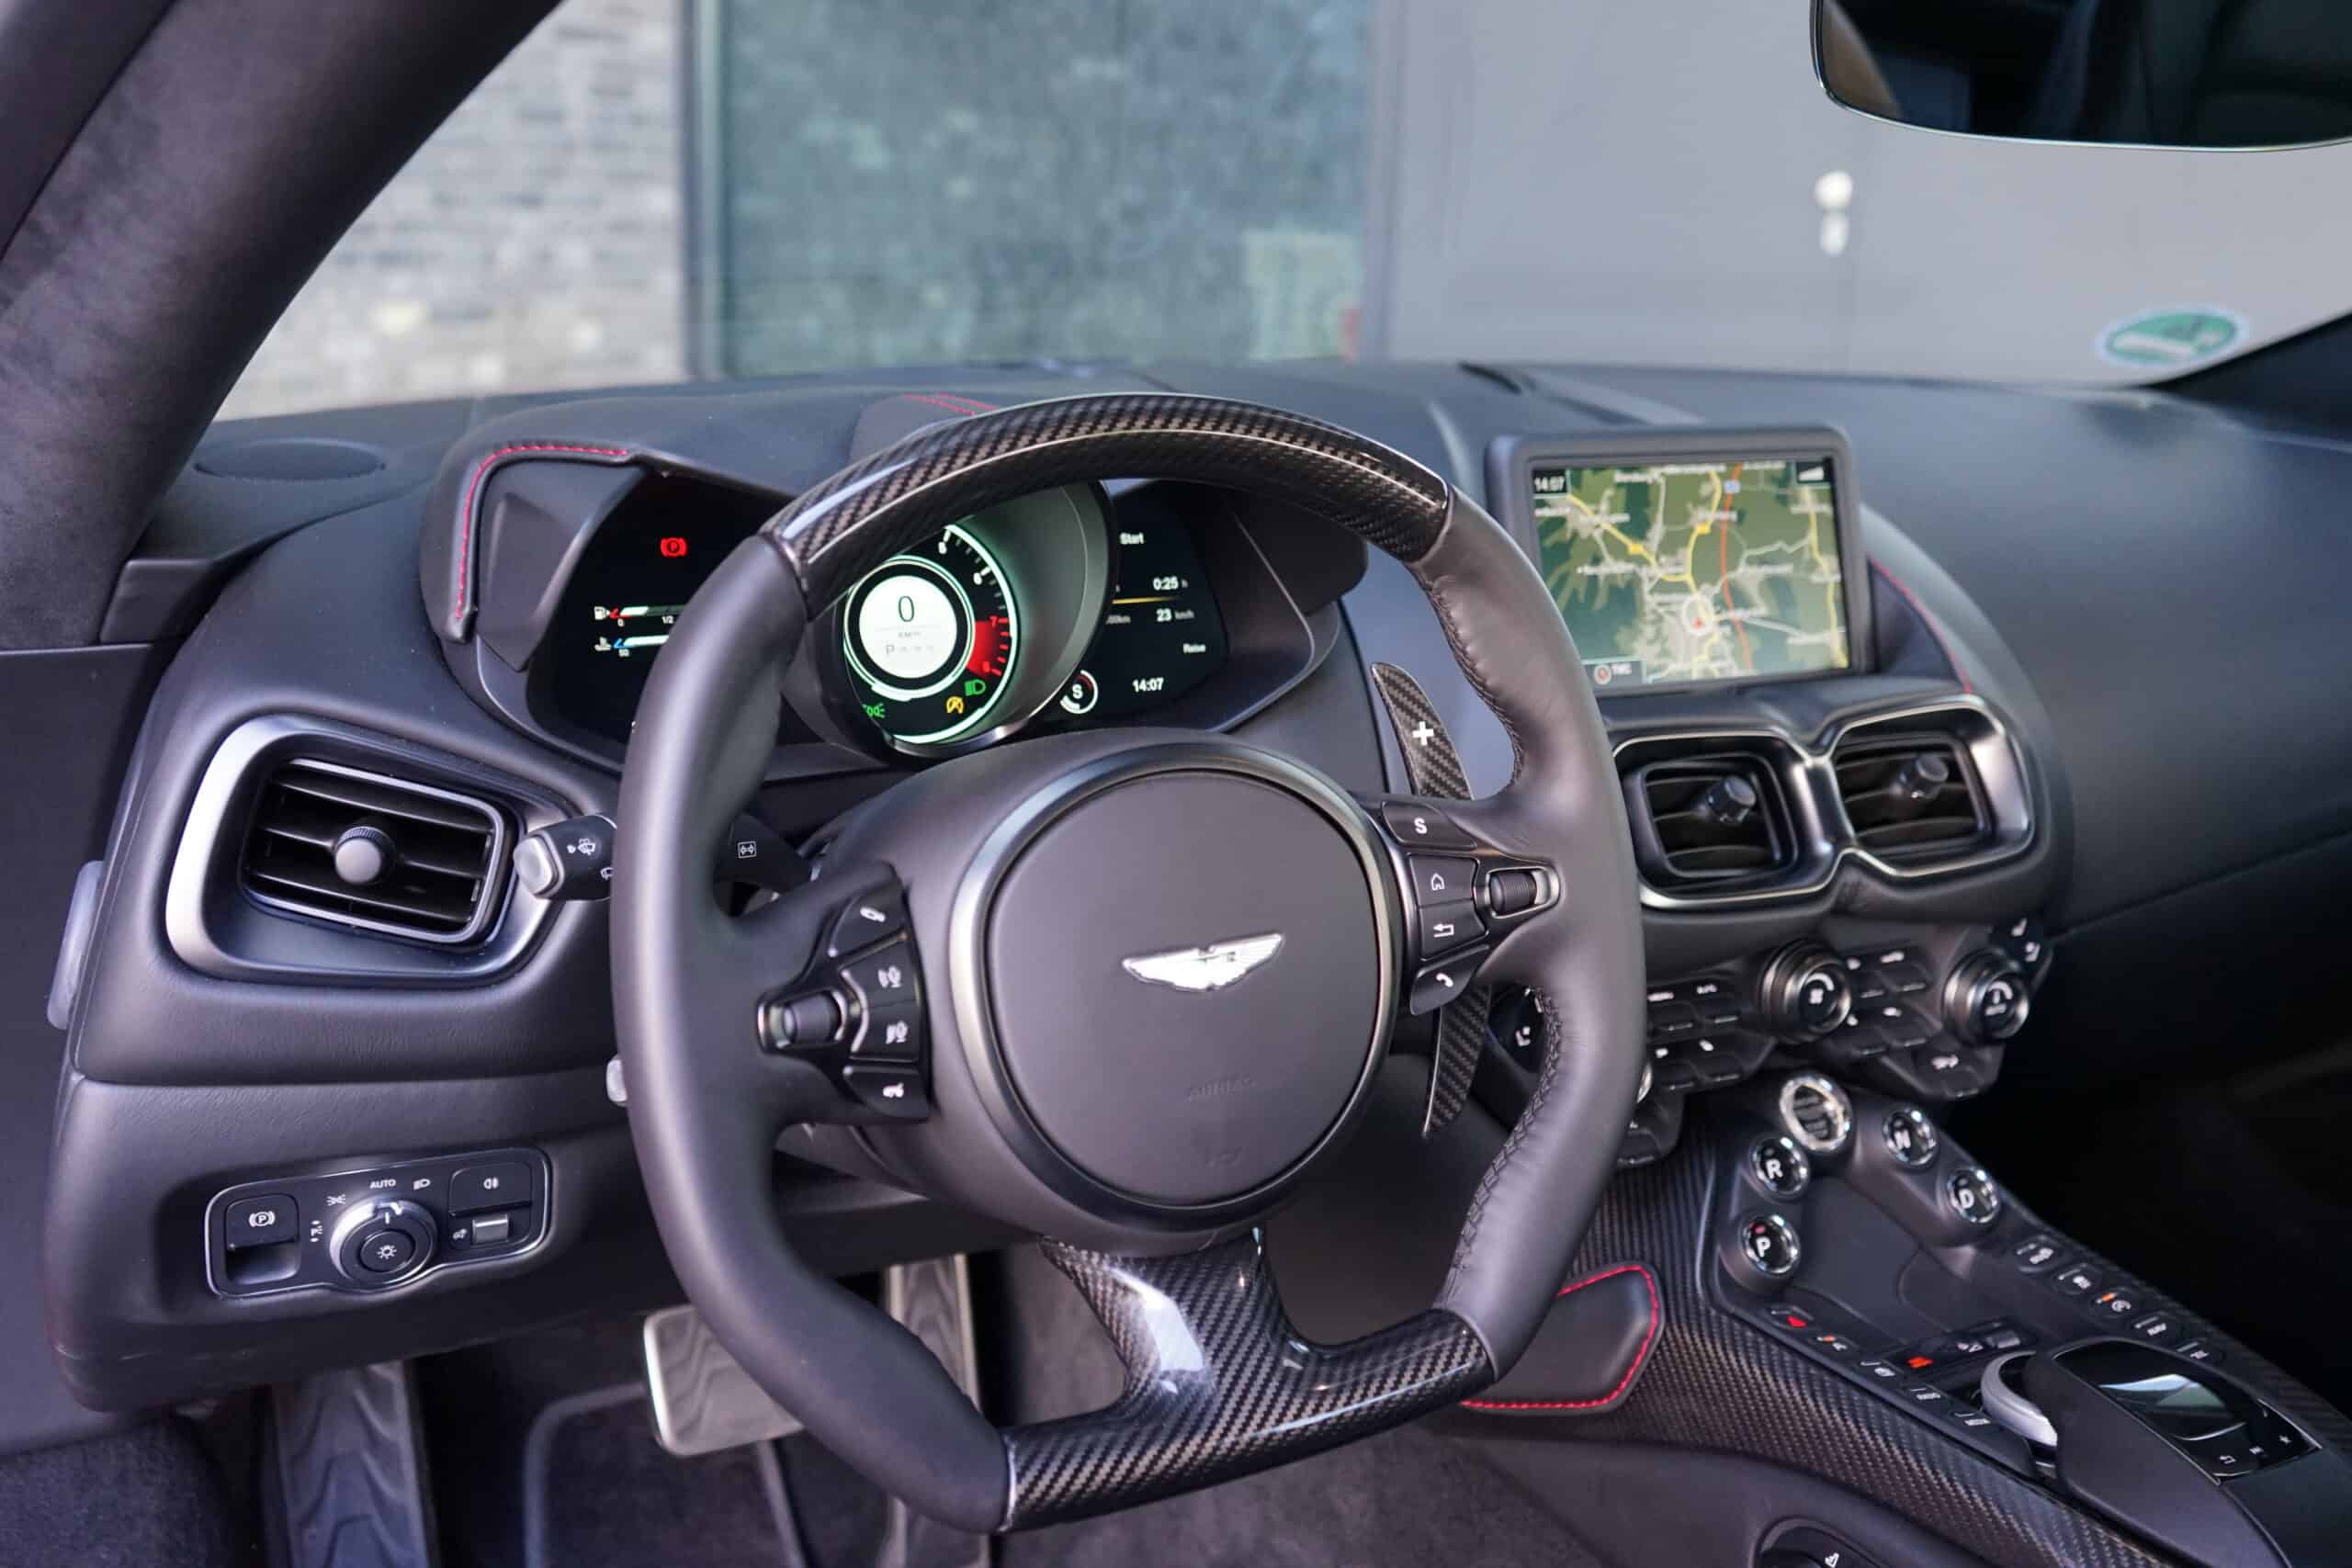 2020 Aston Martin Vantage (510 PS) - Meine 5 Highlights! Fahrbericht | Review | Test | V8 Sound